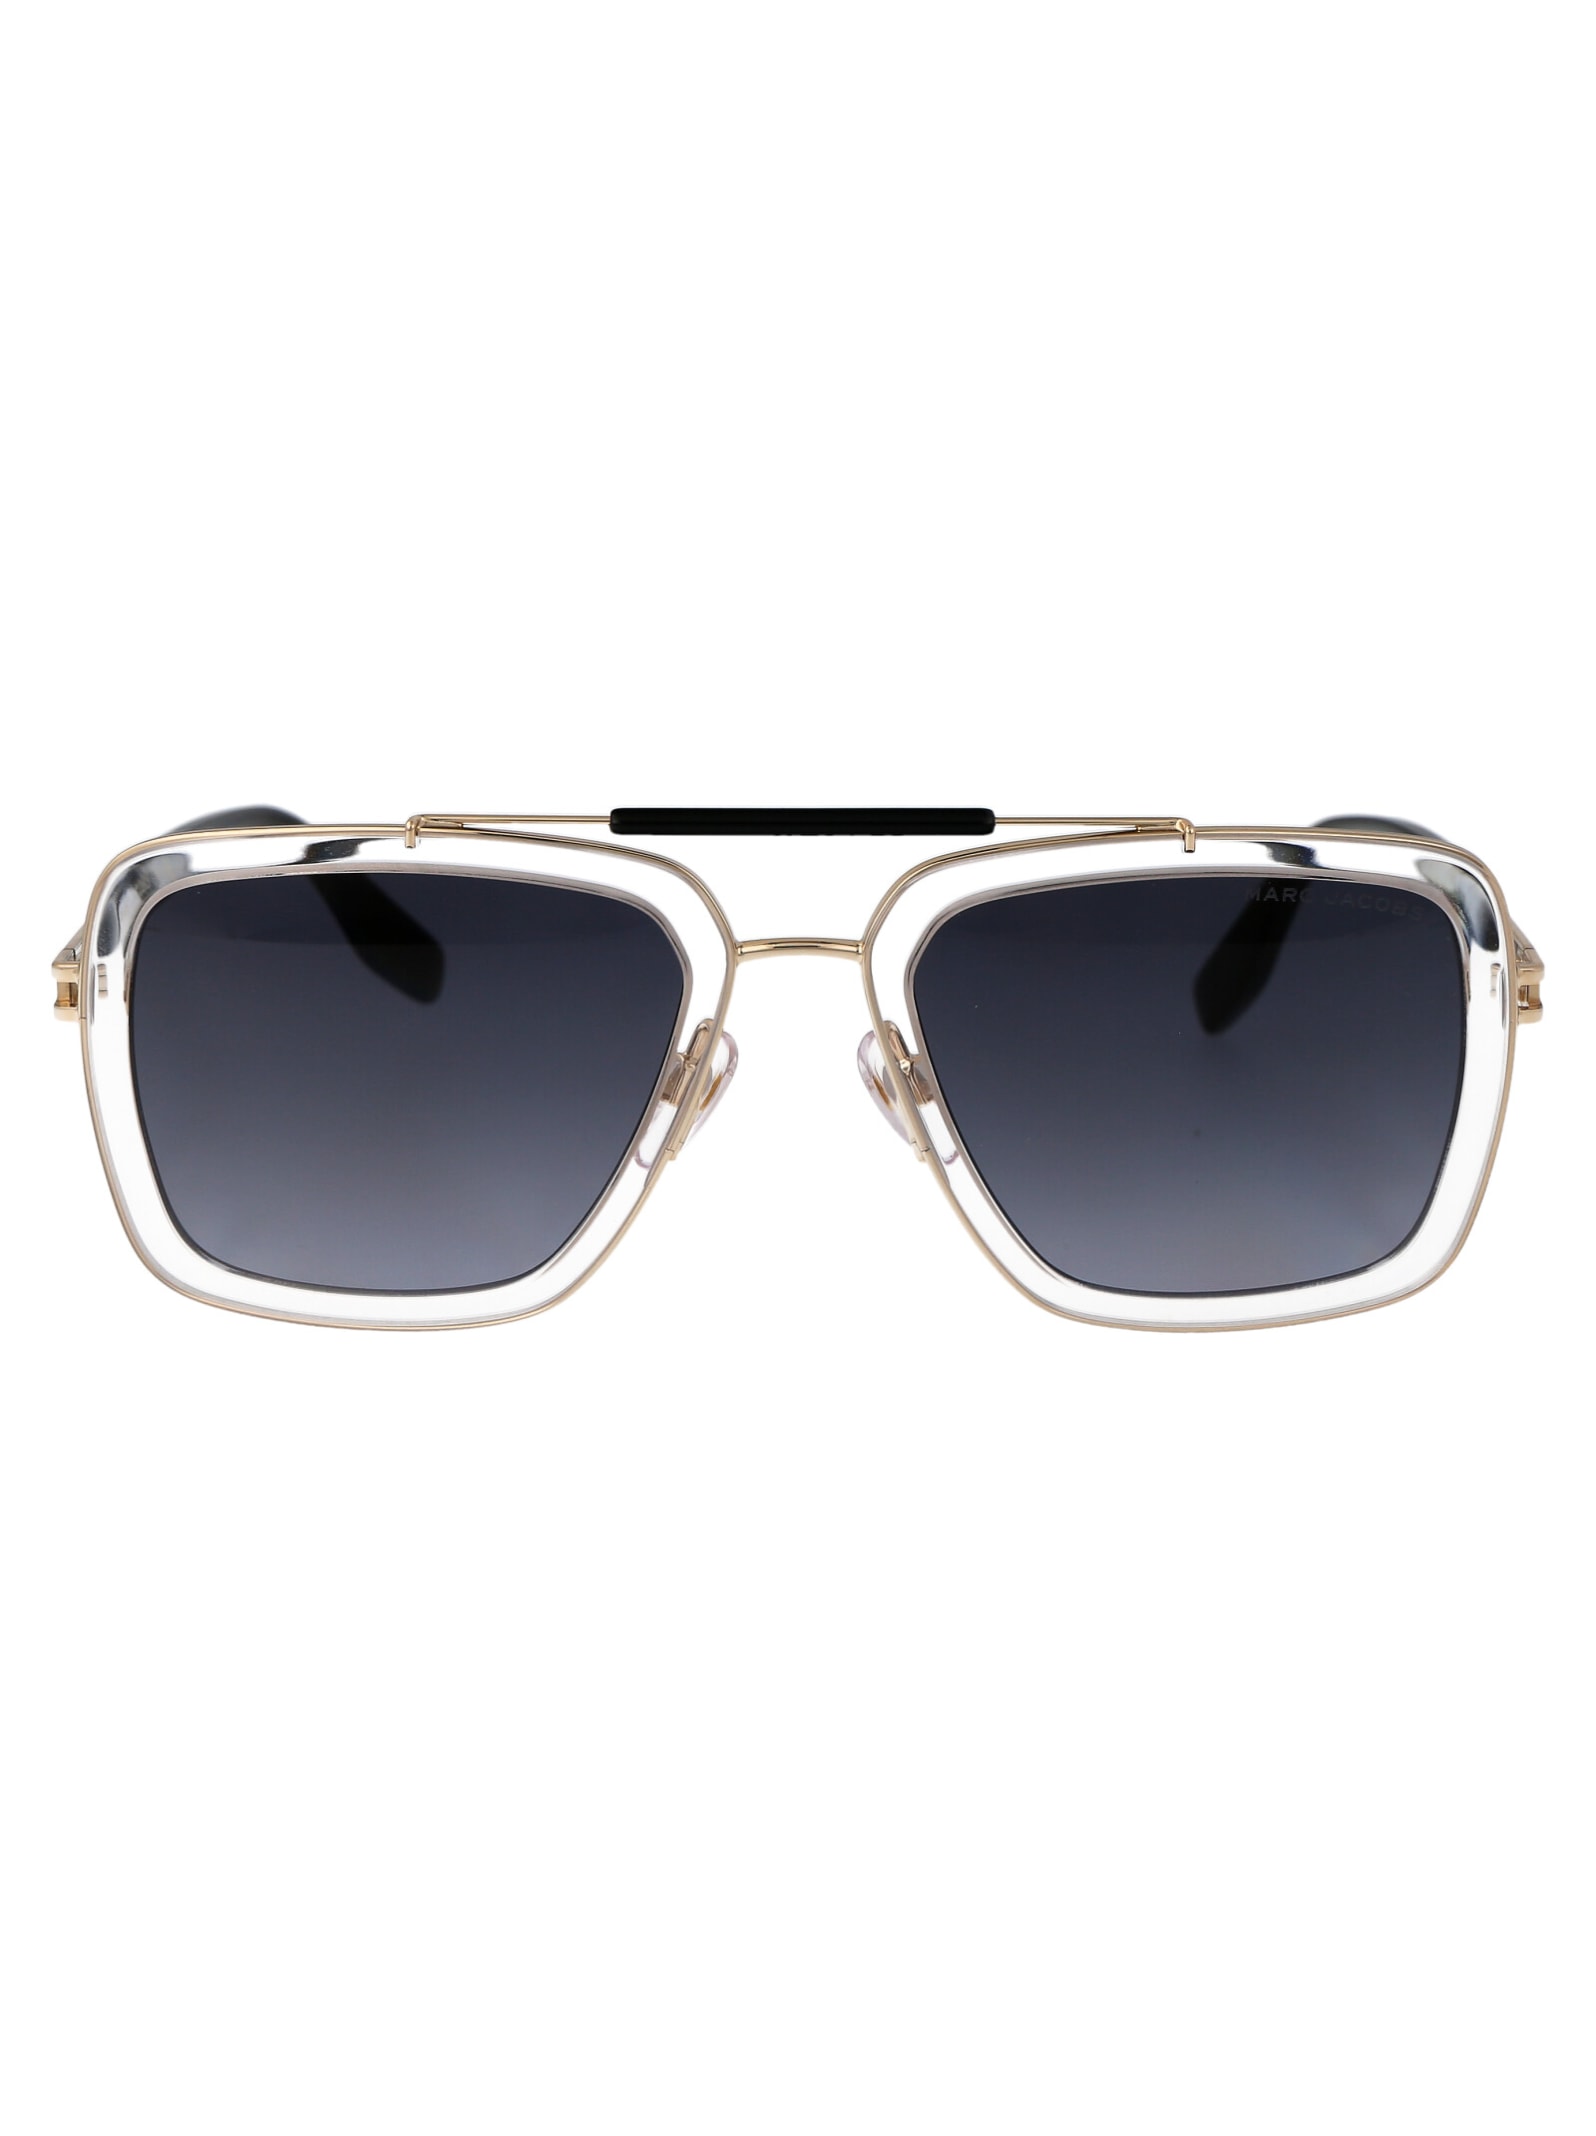 Marc 674/s Sunglasses